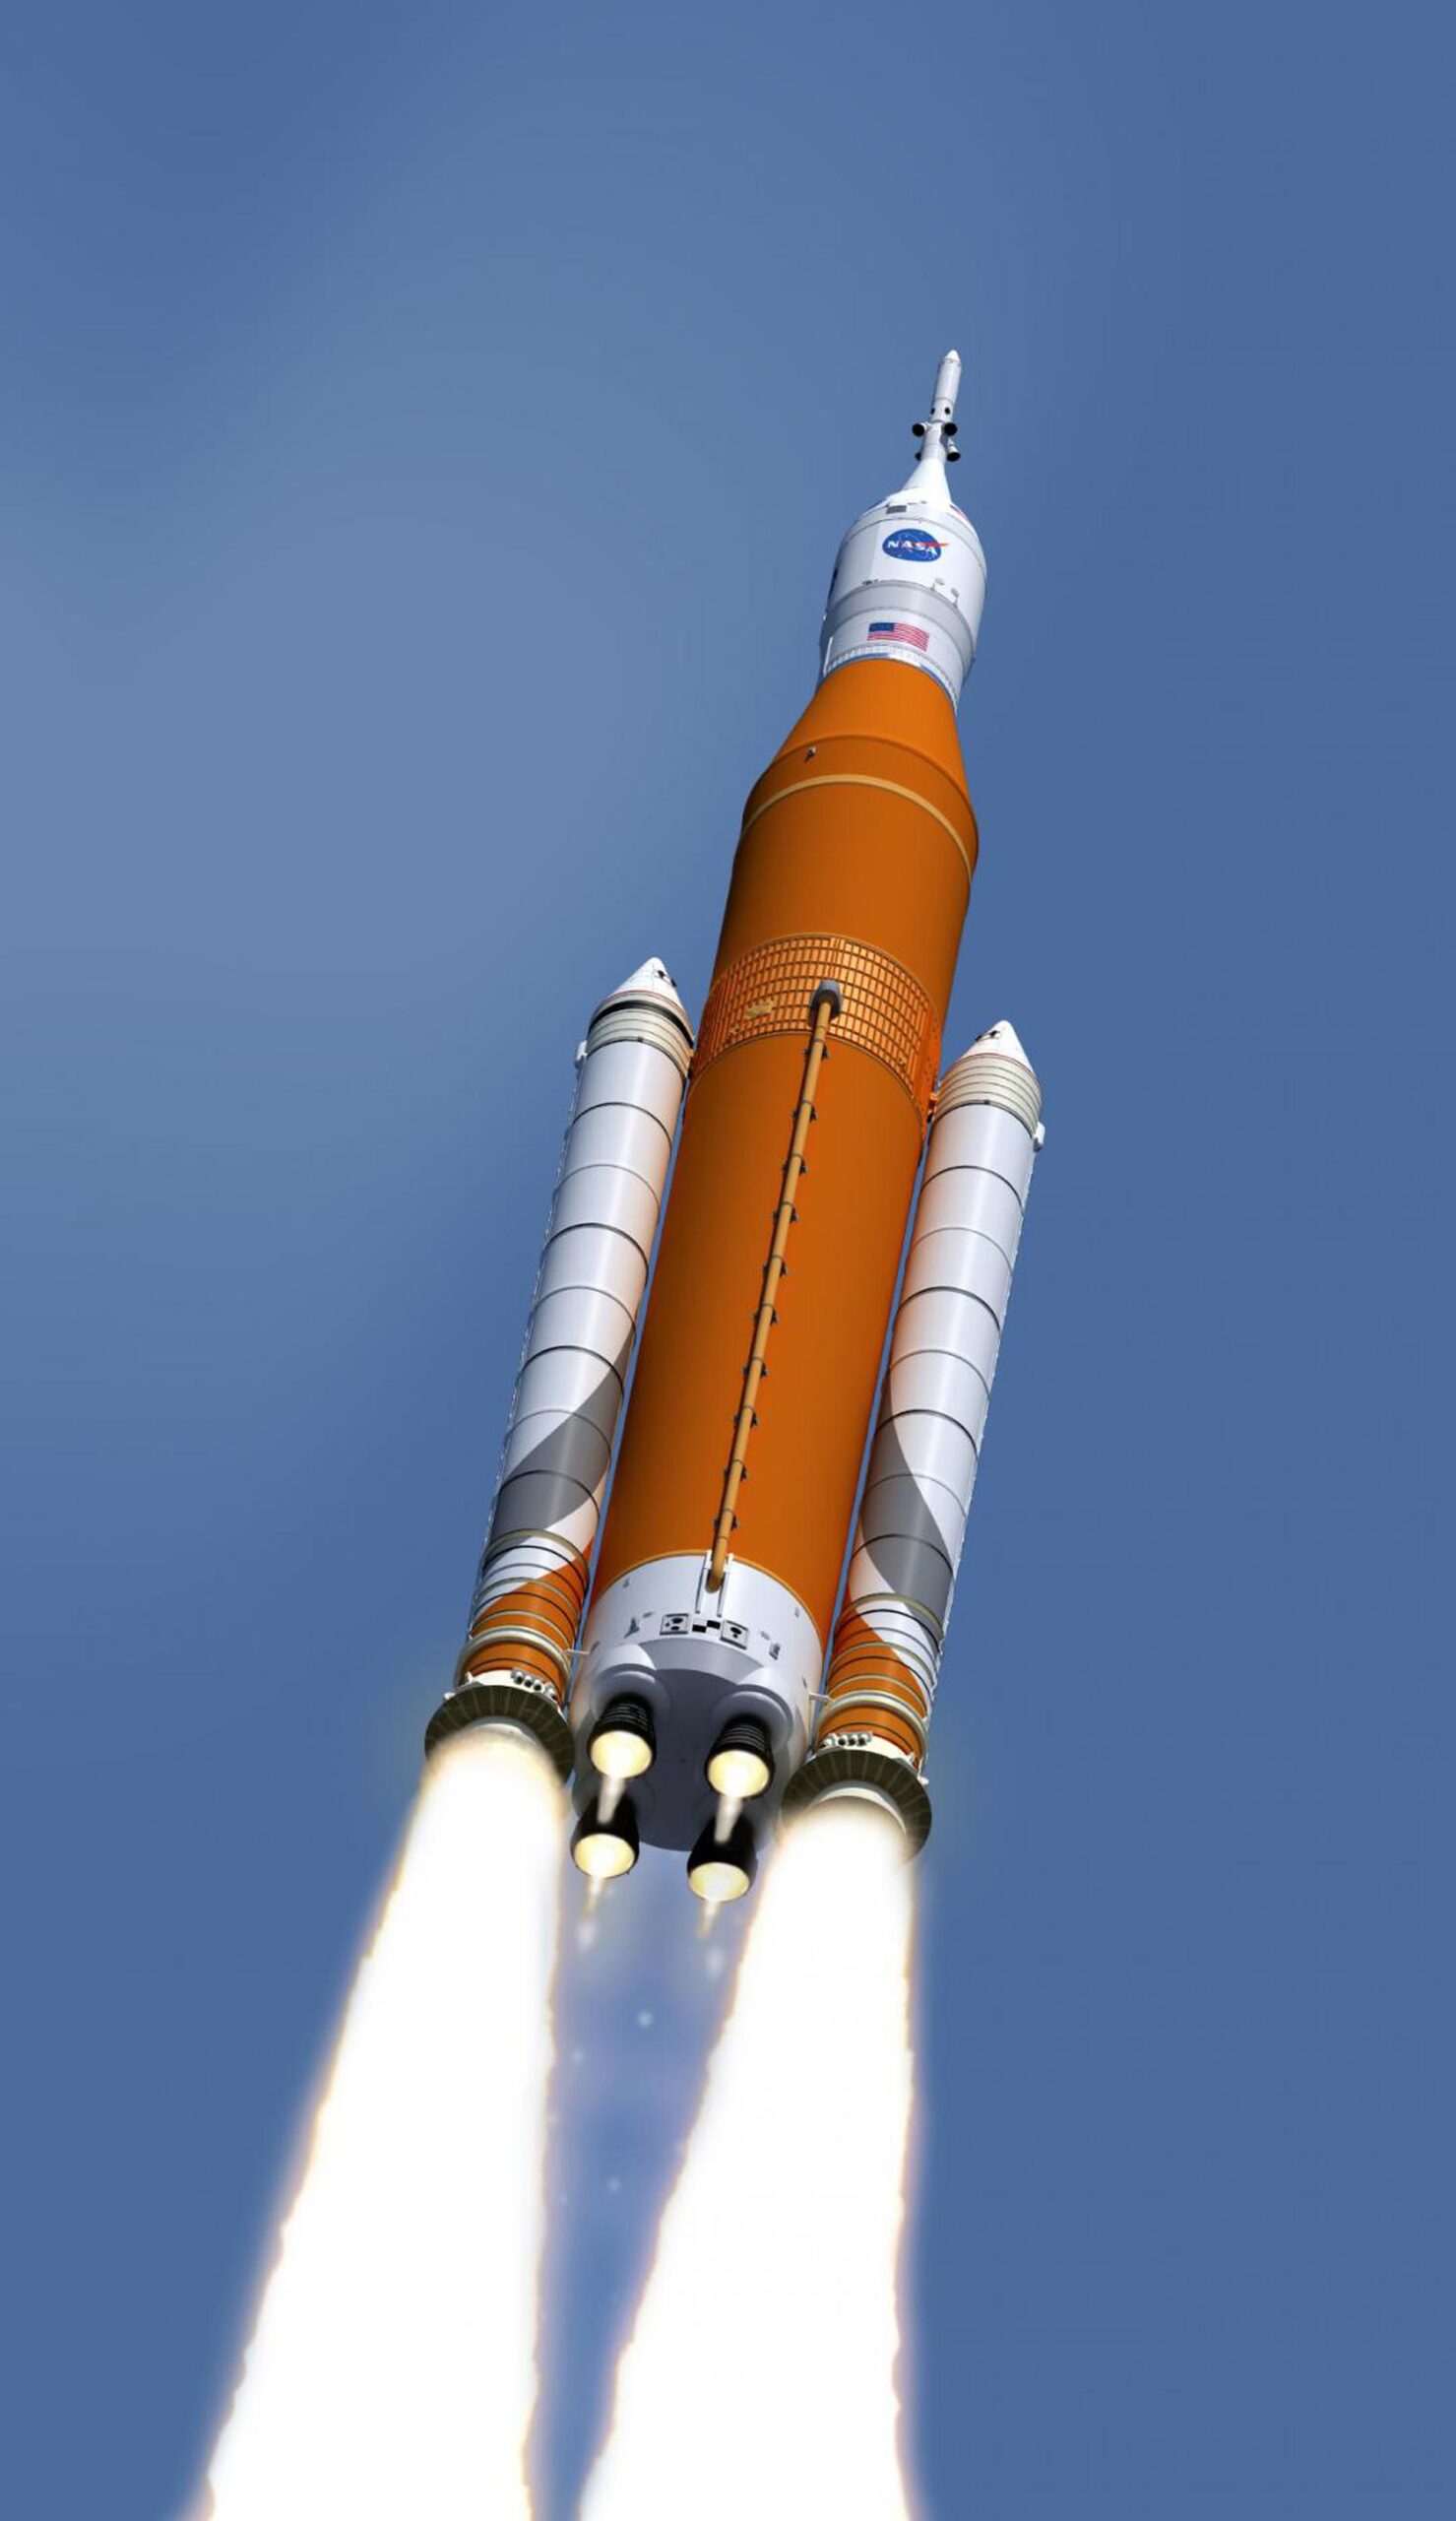 artemis 1 launch time